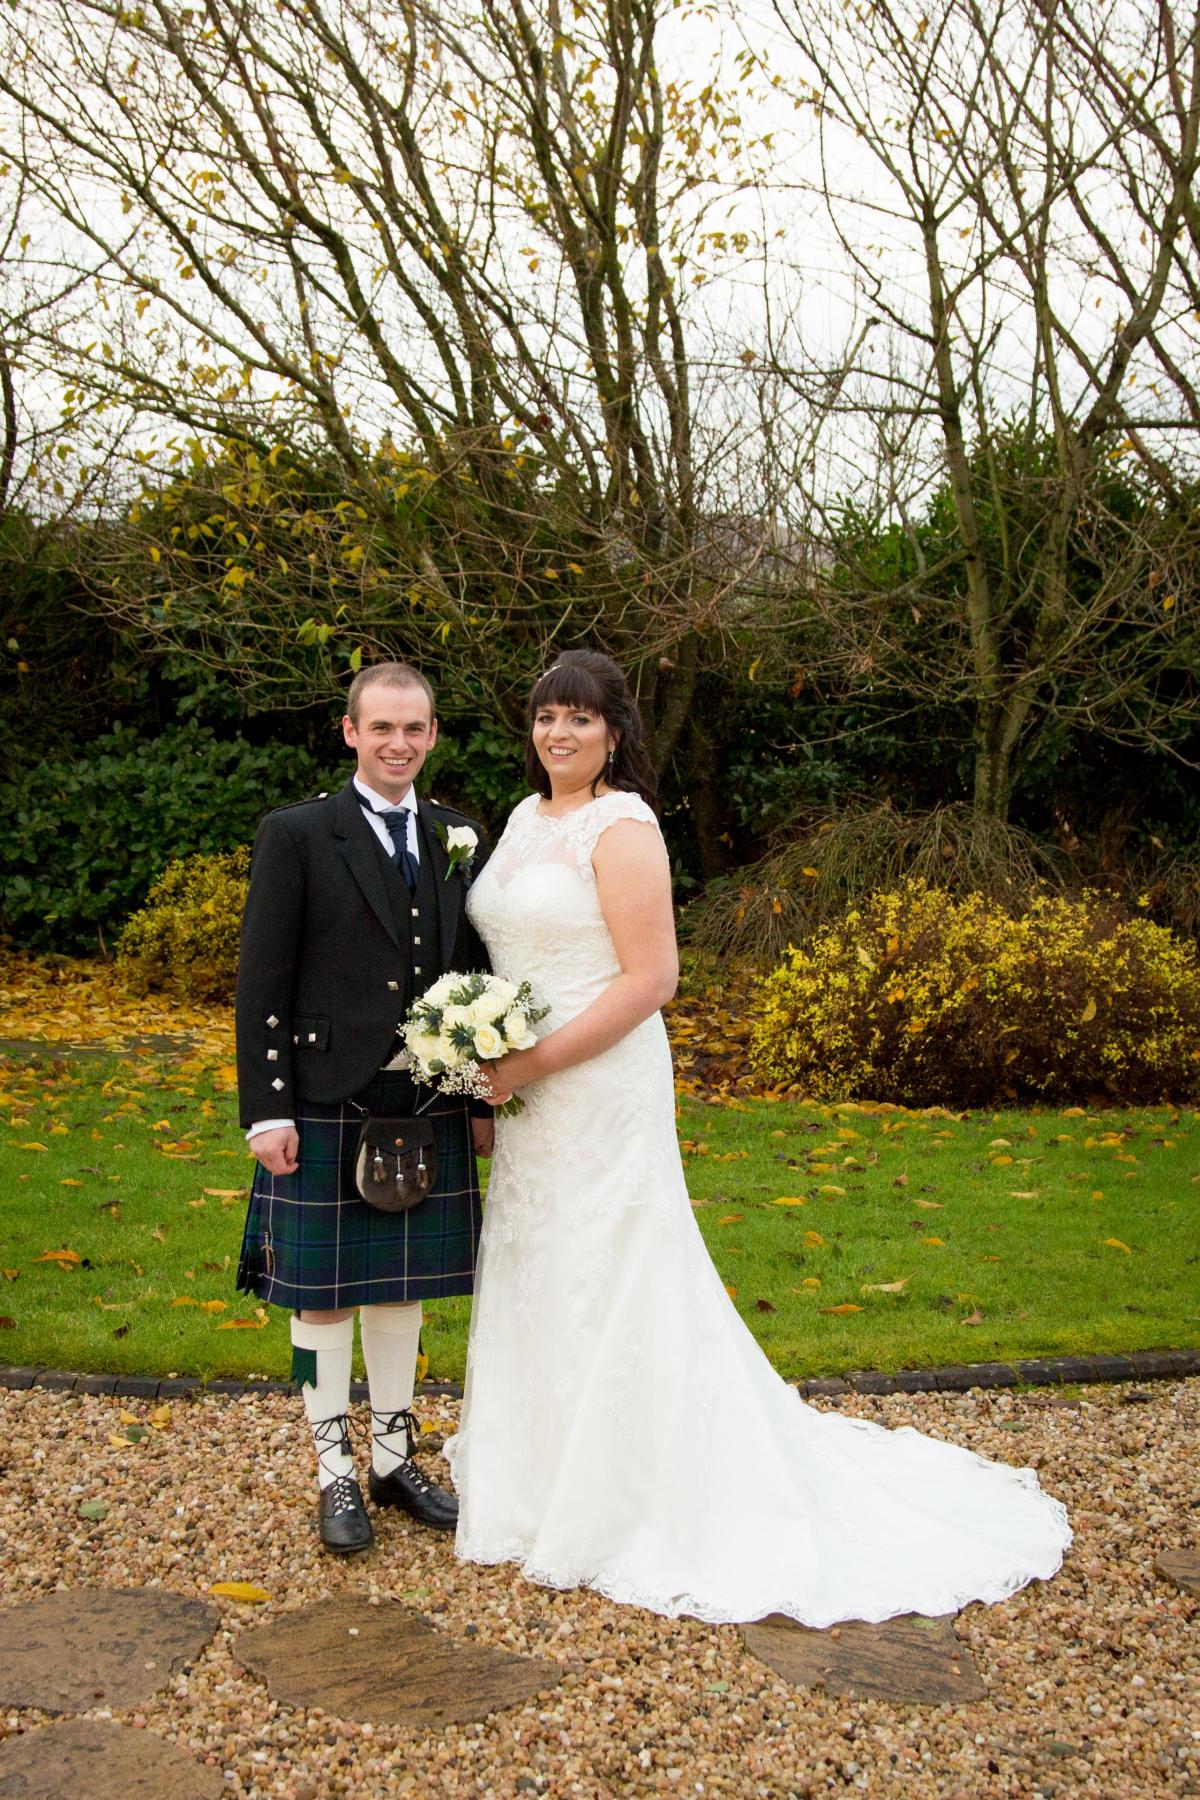 Christine Mundell, Kilmaurs, married Jamie Bryson, Laigh Carnduff Farm, Strathaven, at the Lochside House Hotel, New Cumnock